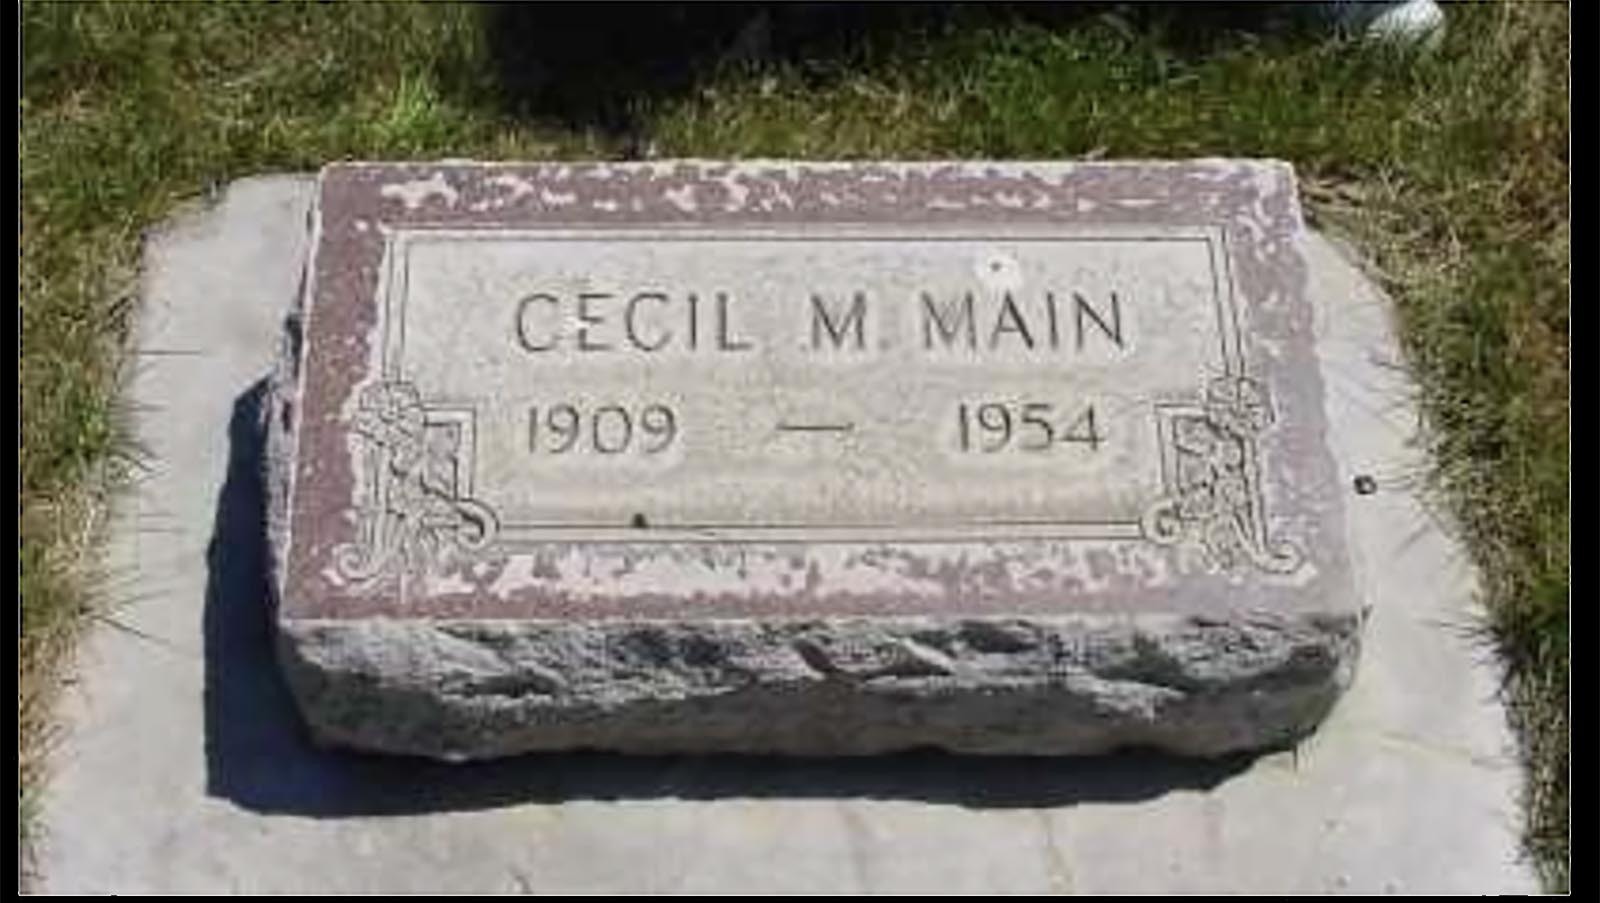 The headstone of Cecil Main in Alliance, Nebraska.